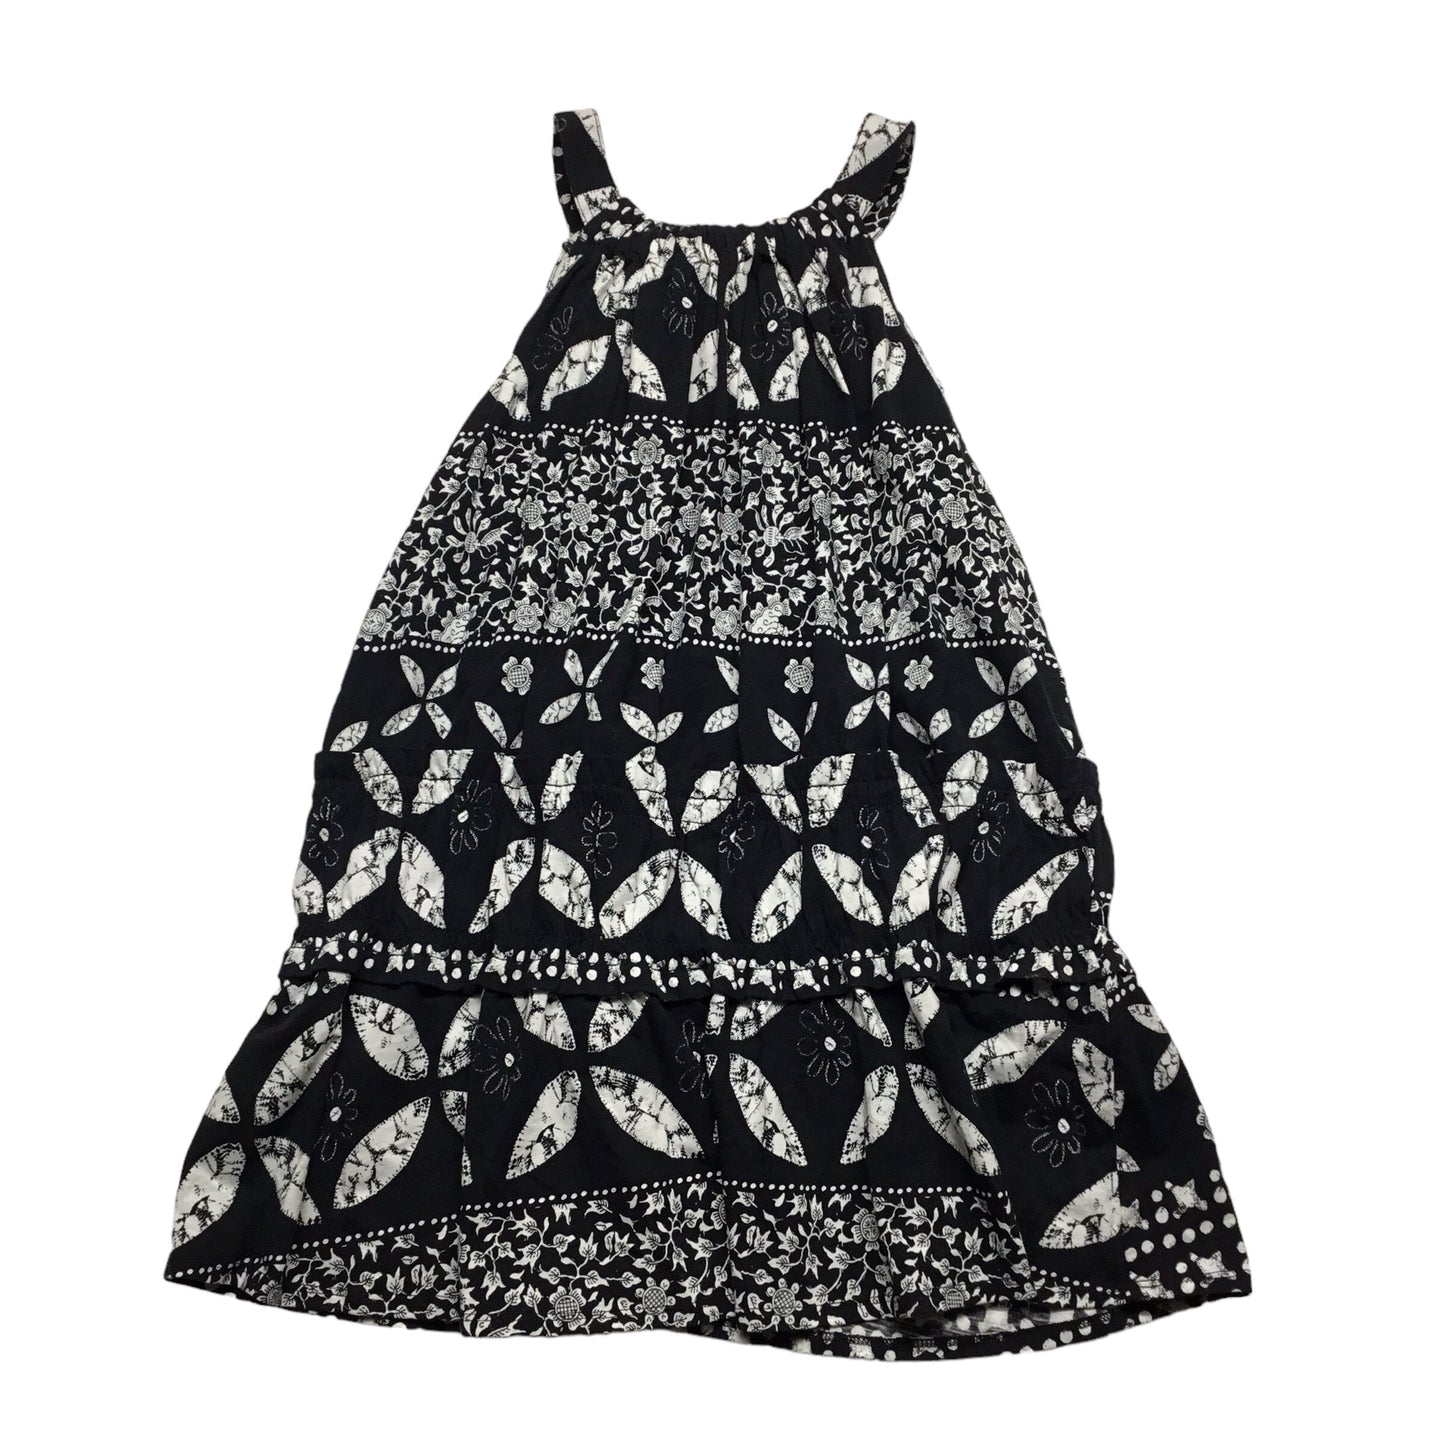 Black & White Dress Casual Short Inc, Size 1x